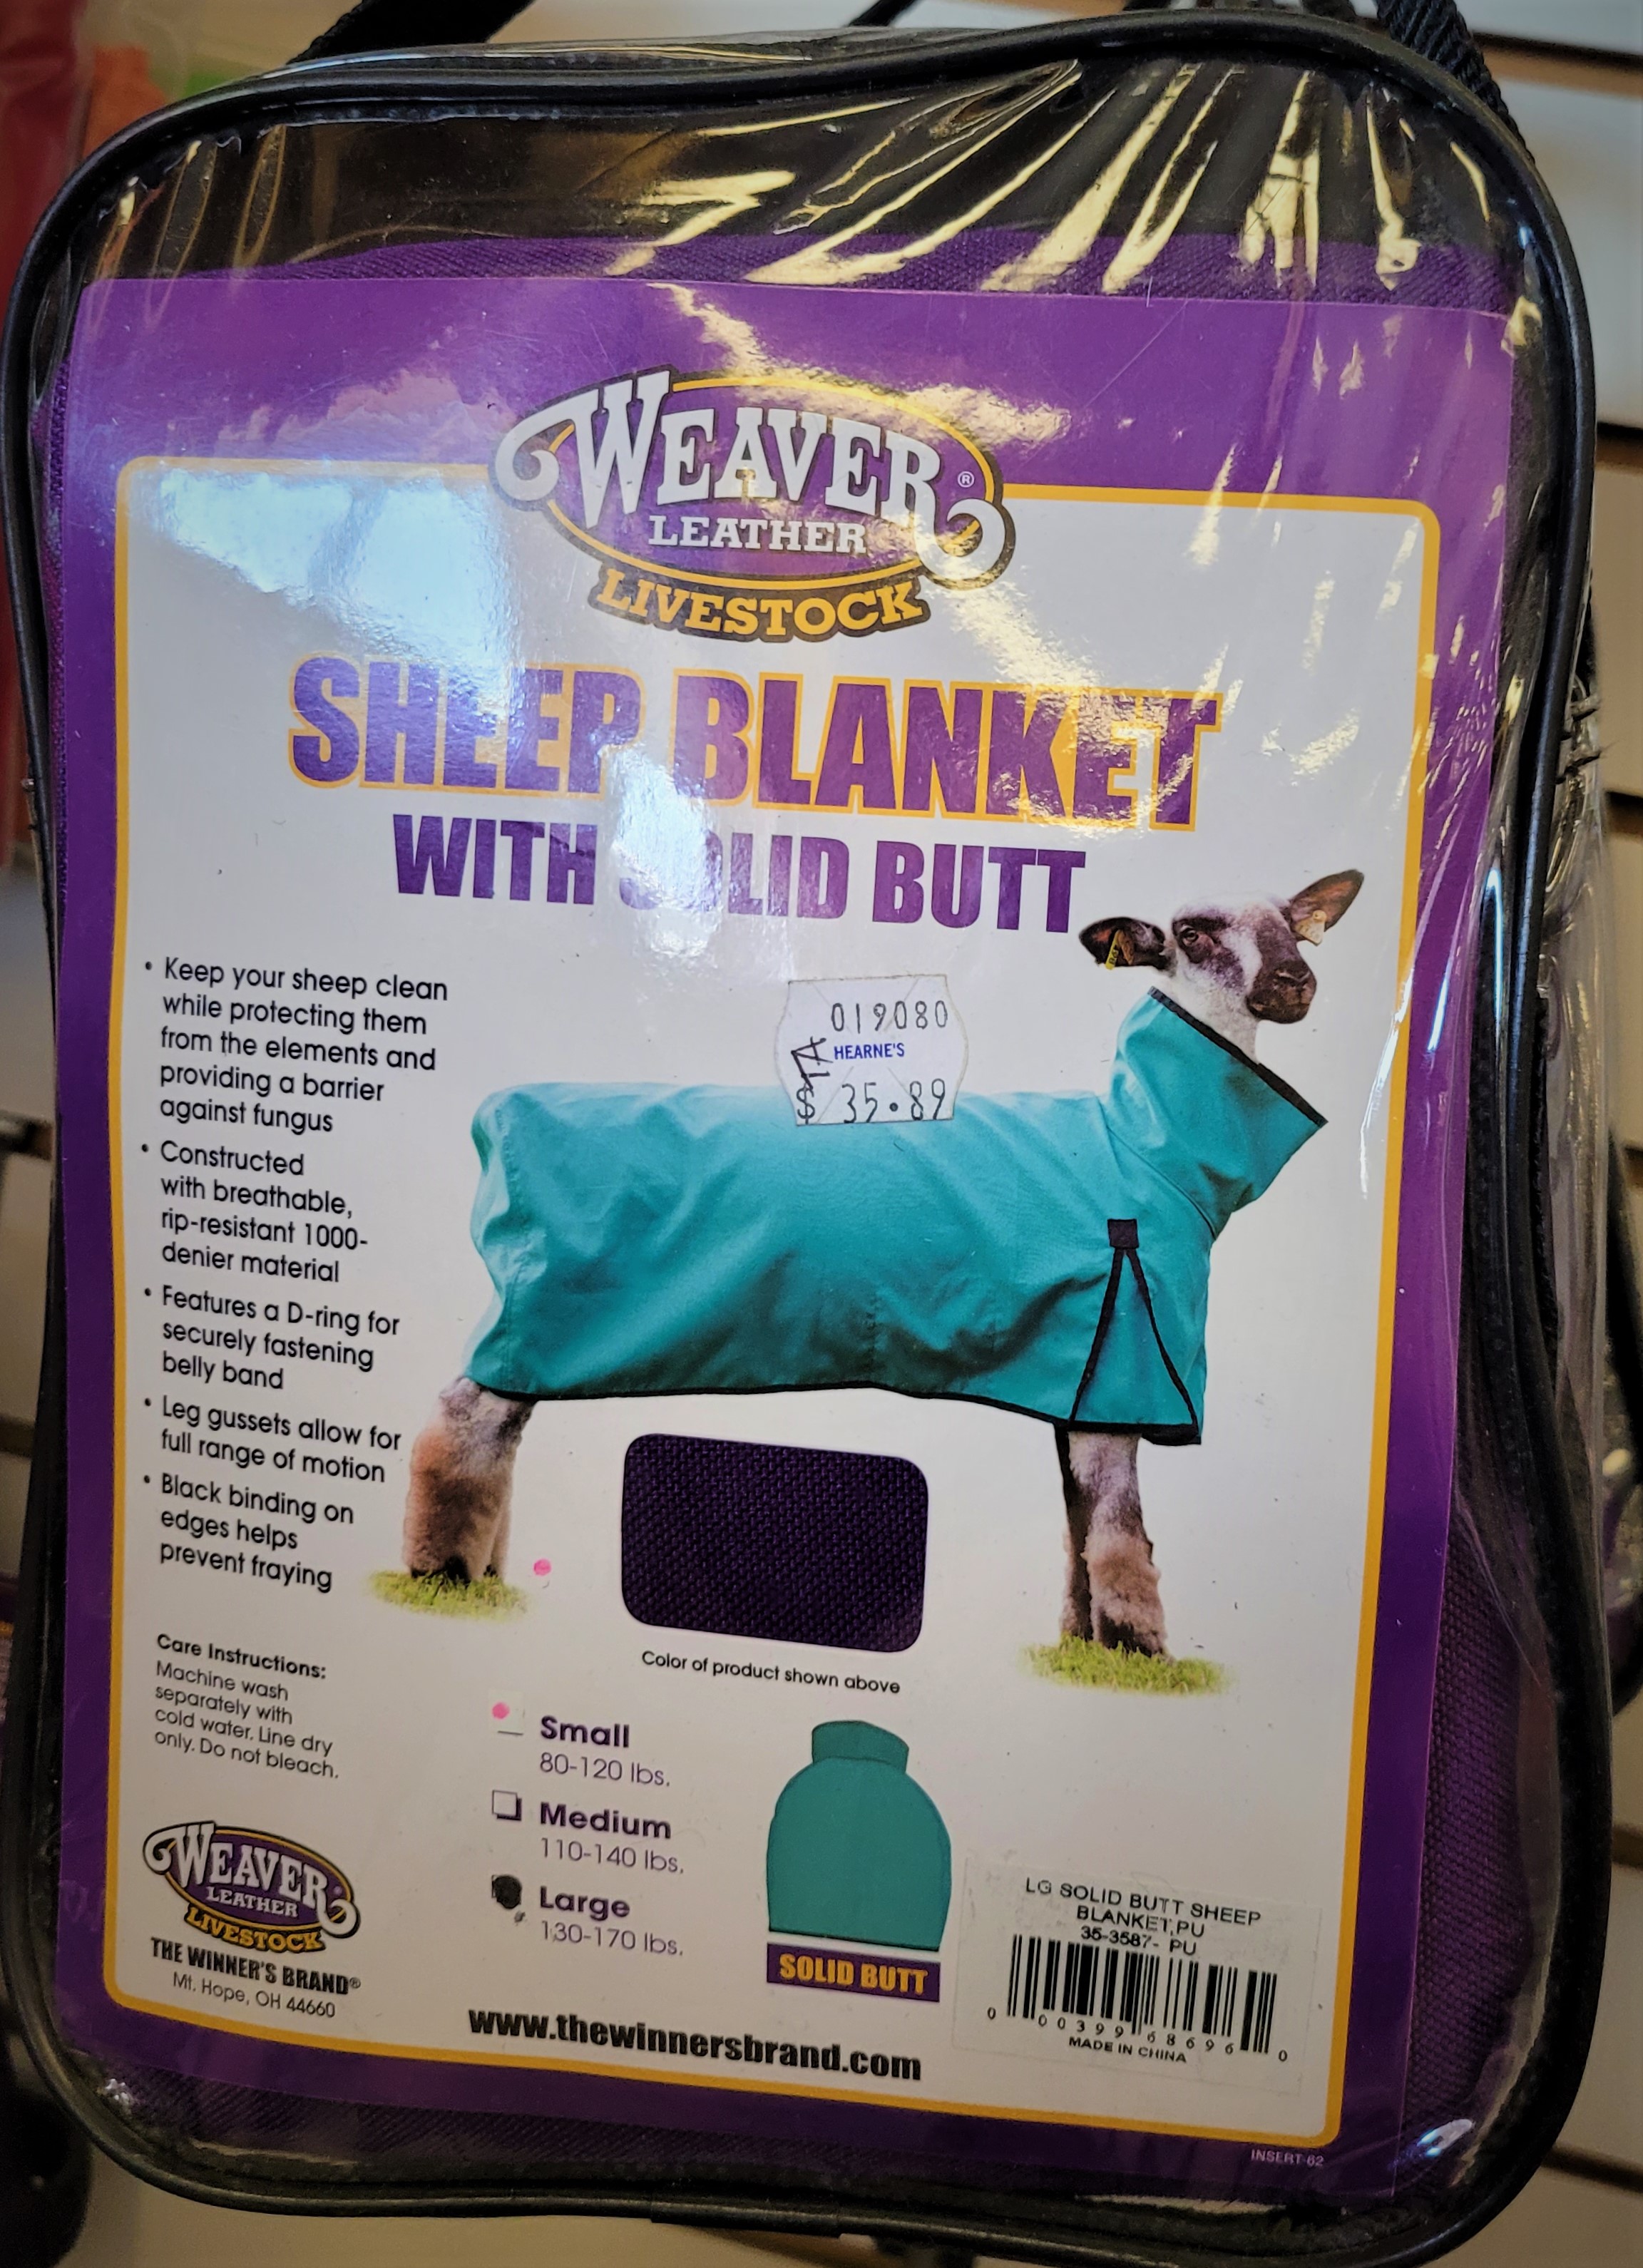 weaver-leather-livestock-sheep-blanket-solid-butt-ta019080-35.89-packaged.jpg